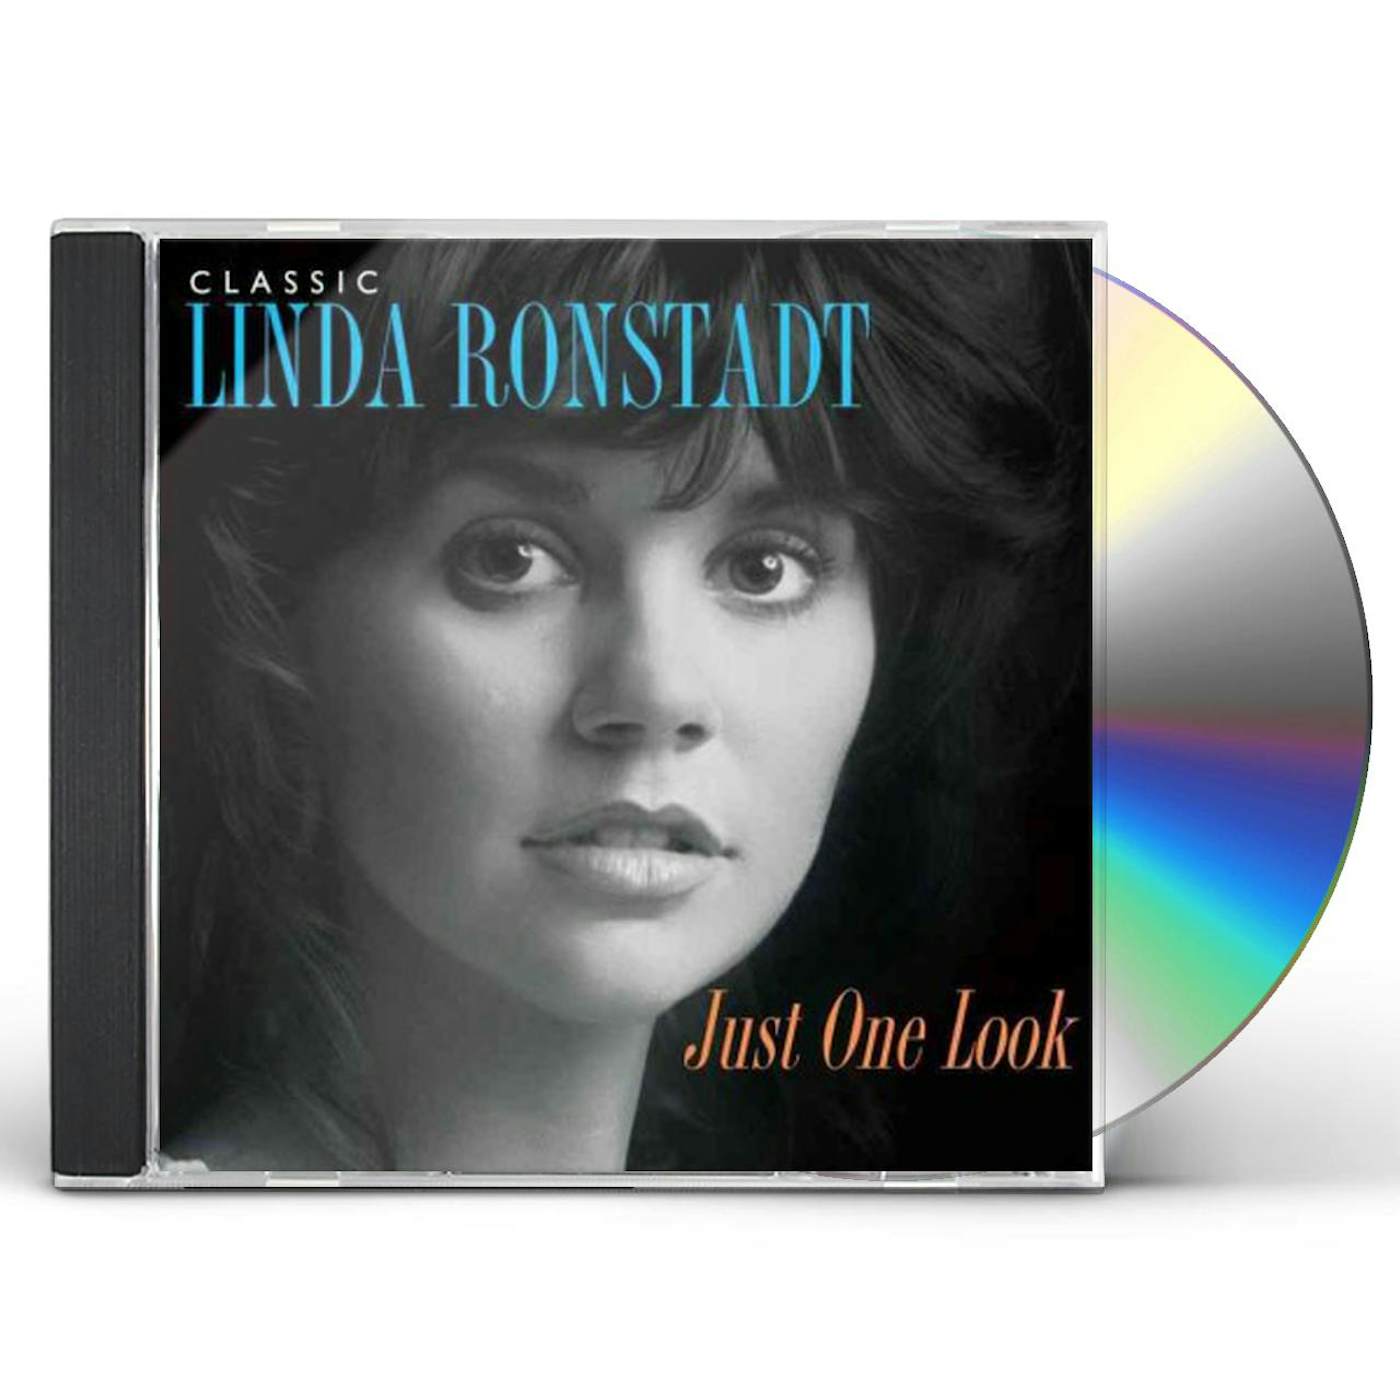 JUST ONE LOOK: CLASSIC LINDA RONSTADT CD